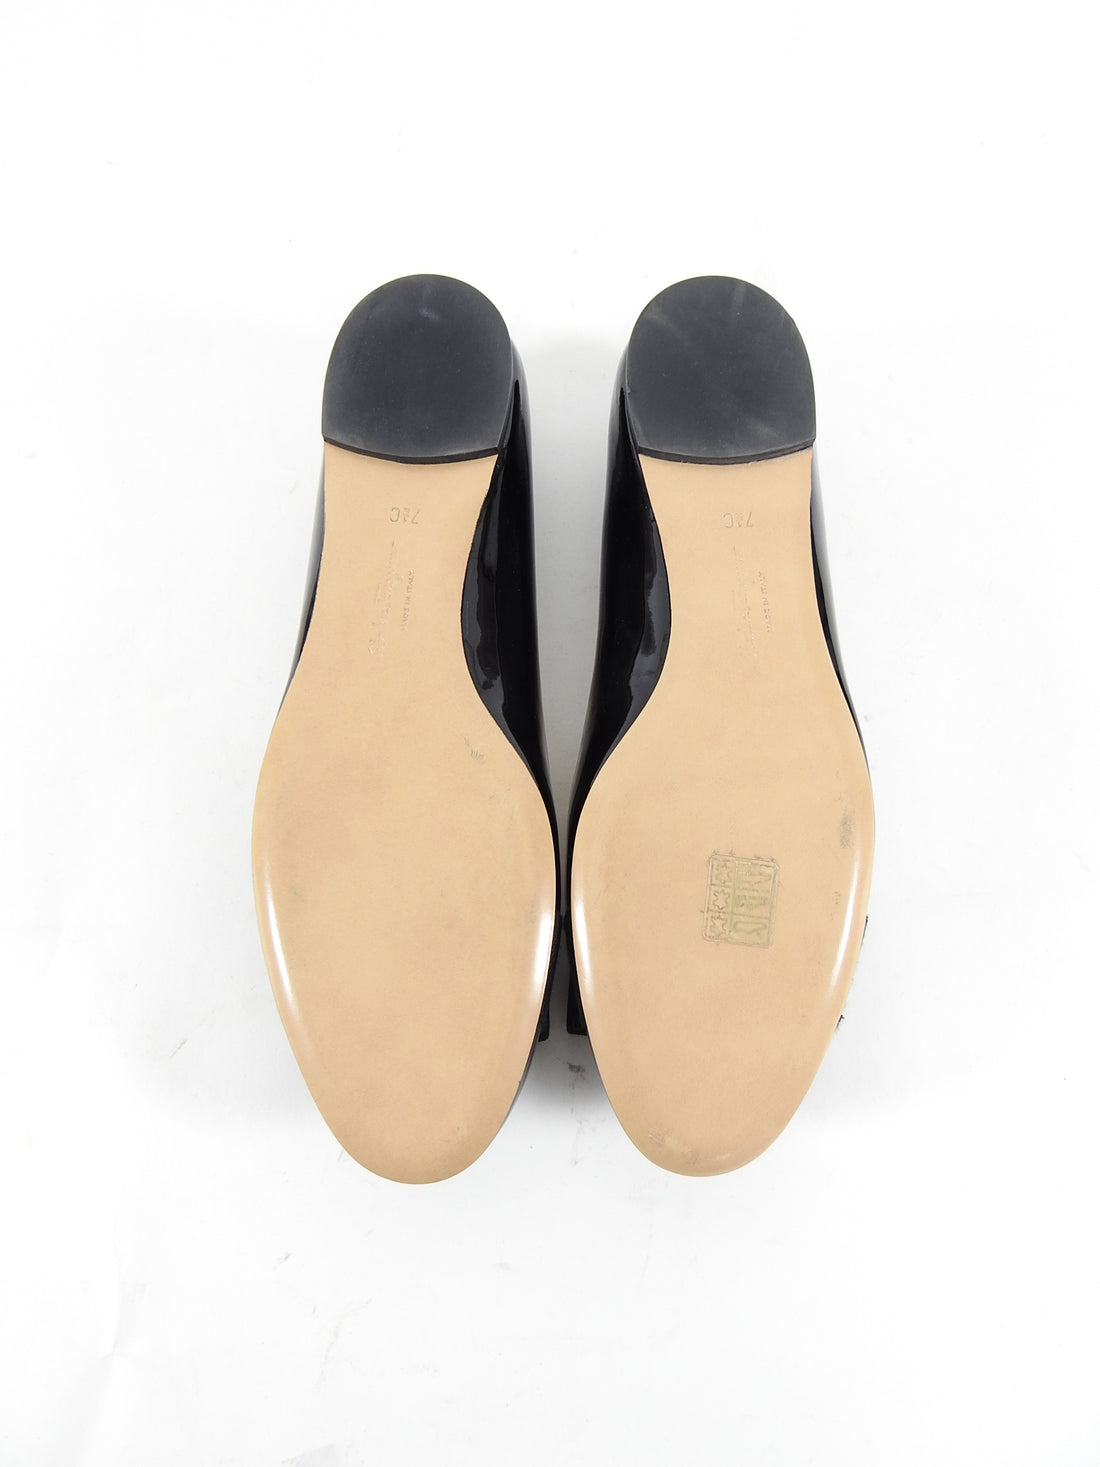 Ferragamo Varina Black Patent Leather Bow Ballet Flat - 7.5 C